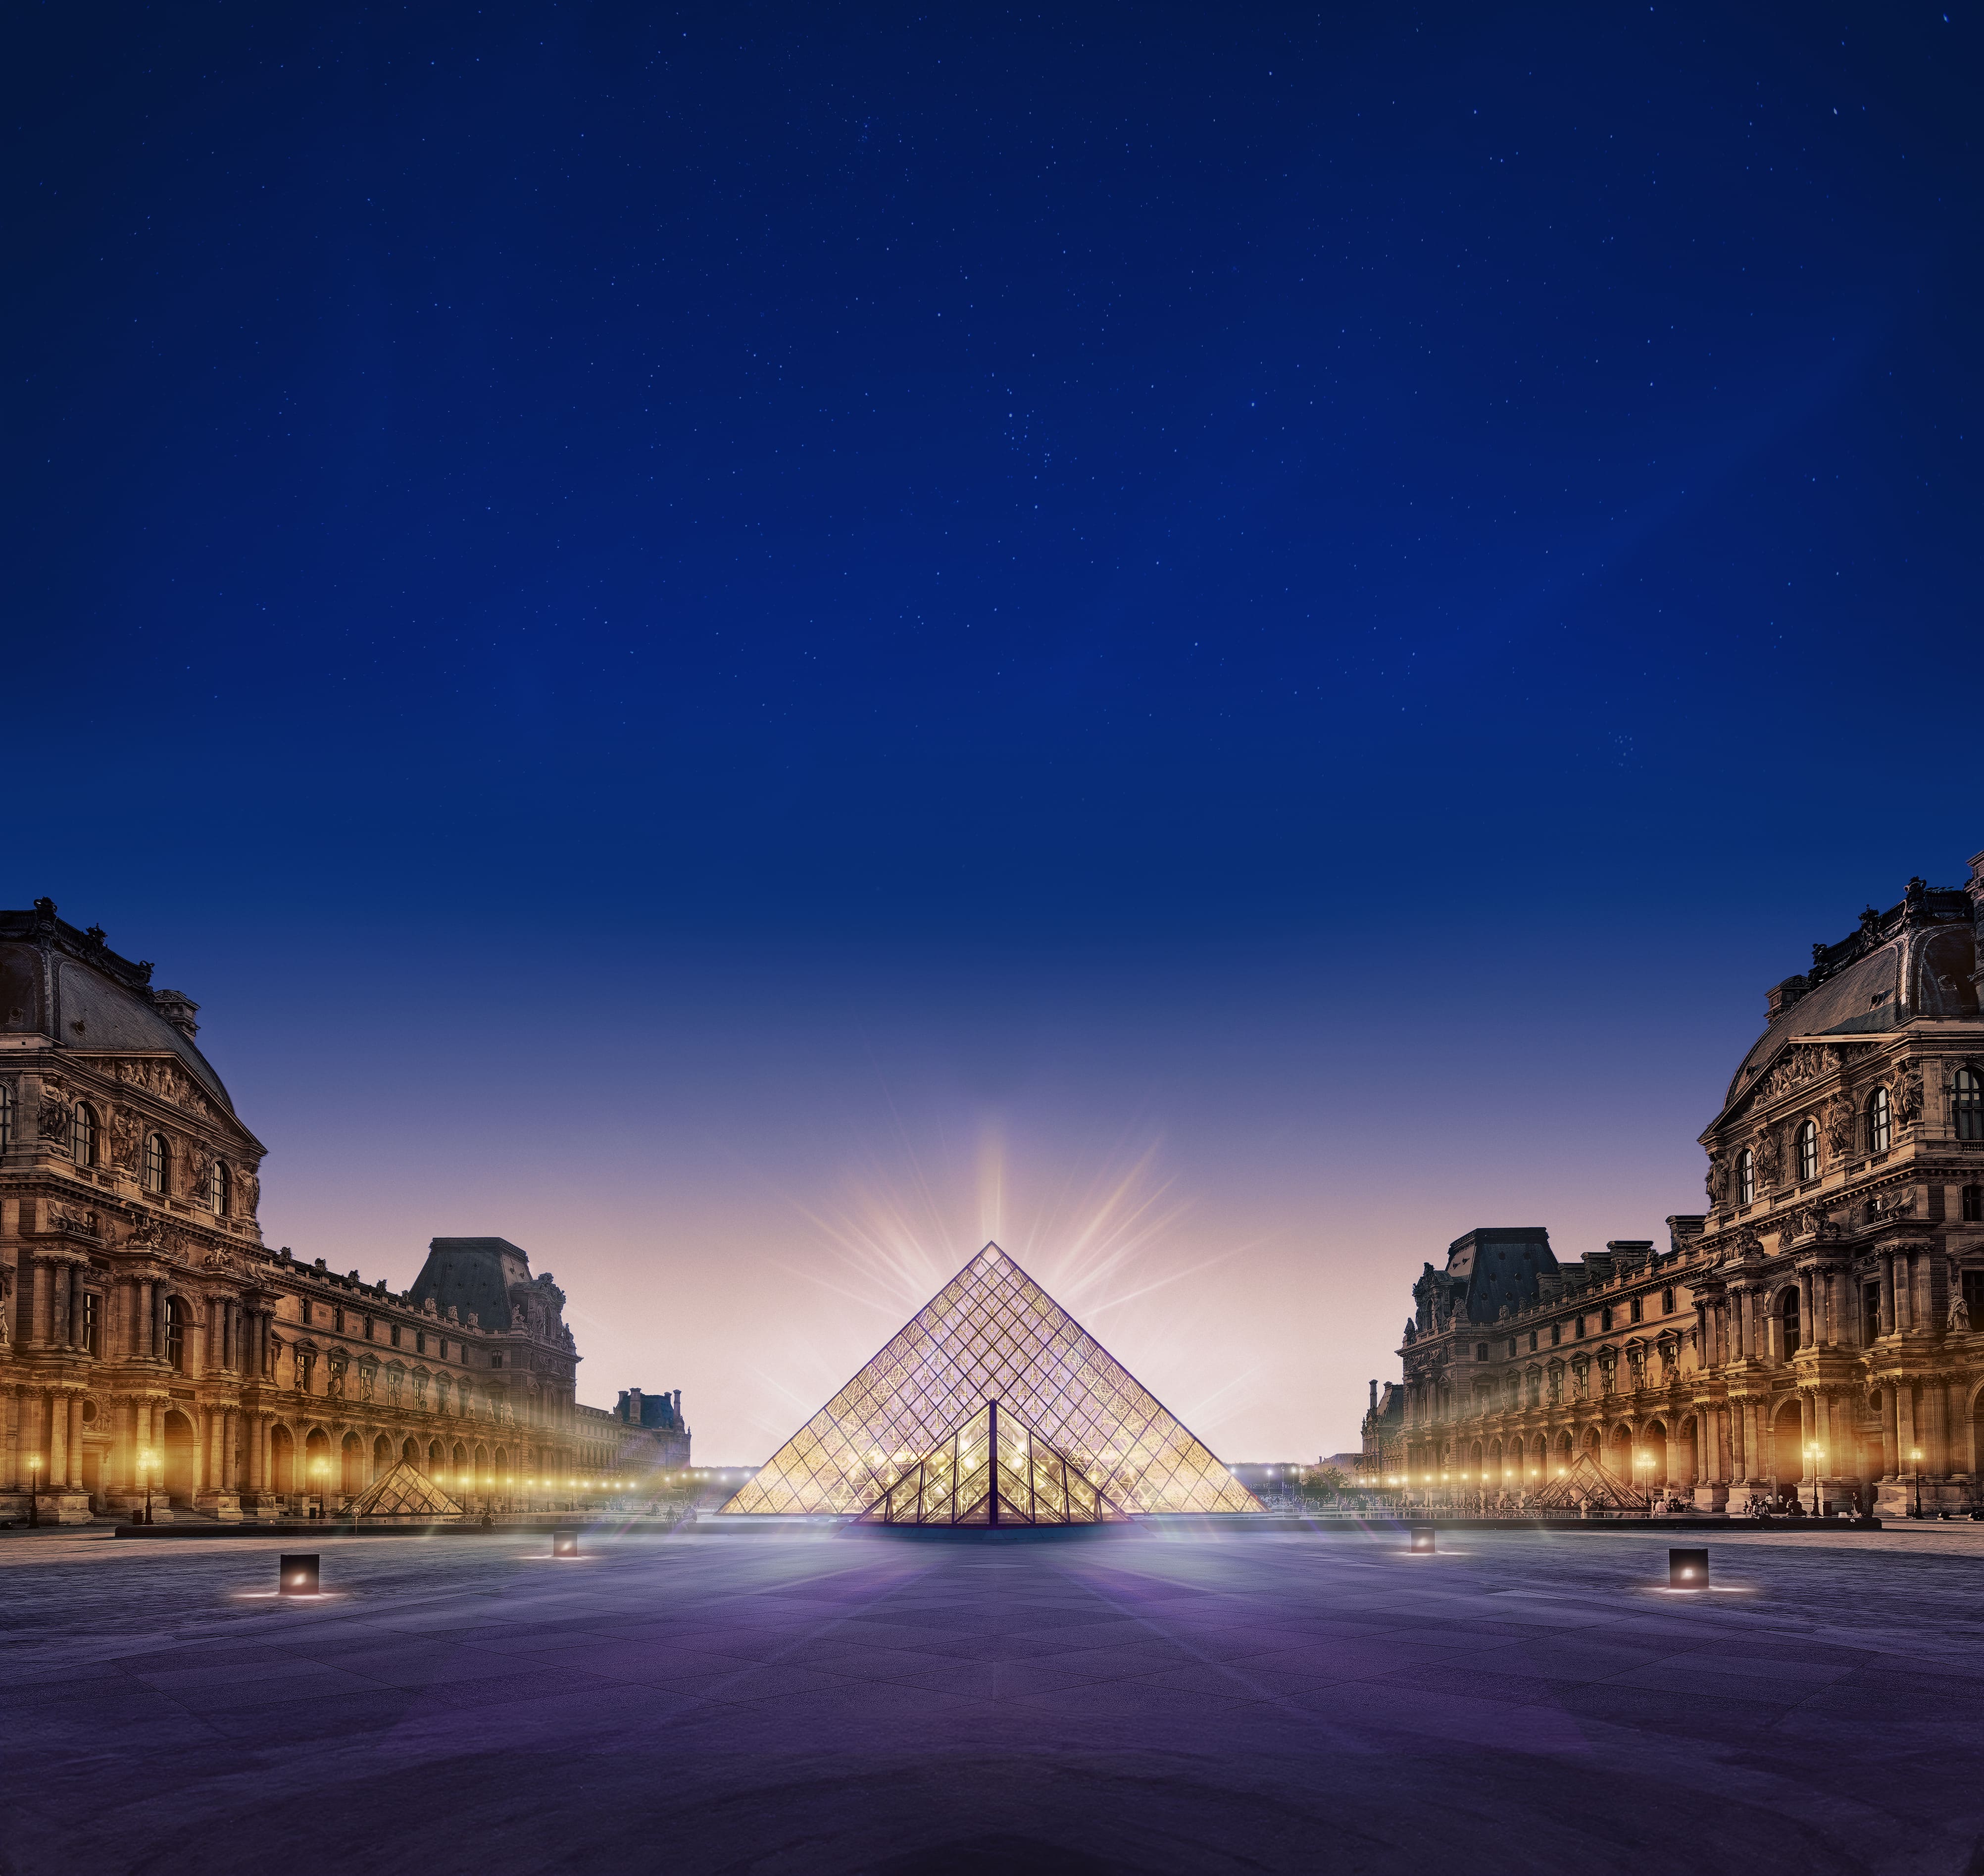 迎接巴黎奧運 Visa 於羅浮宮舉辦 Visa Live at le Louvre 演唱會 